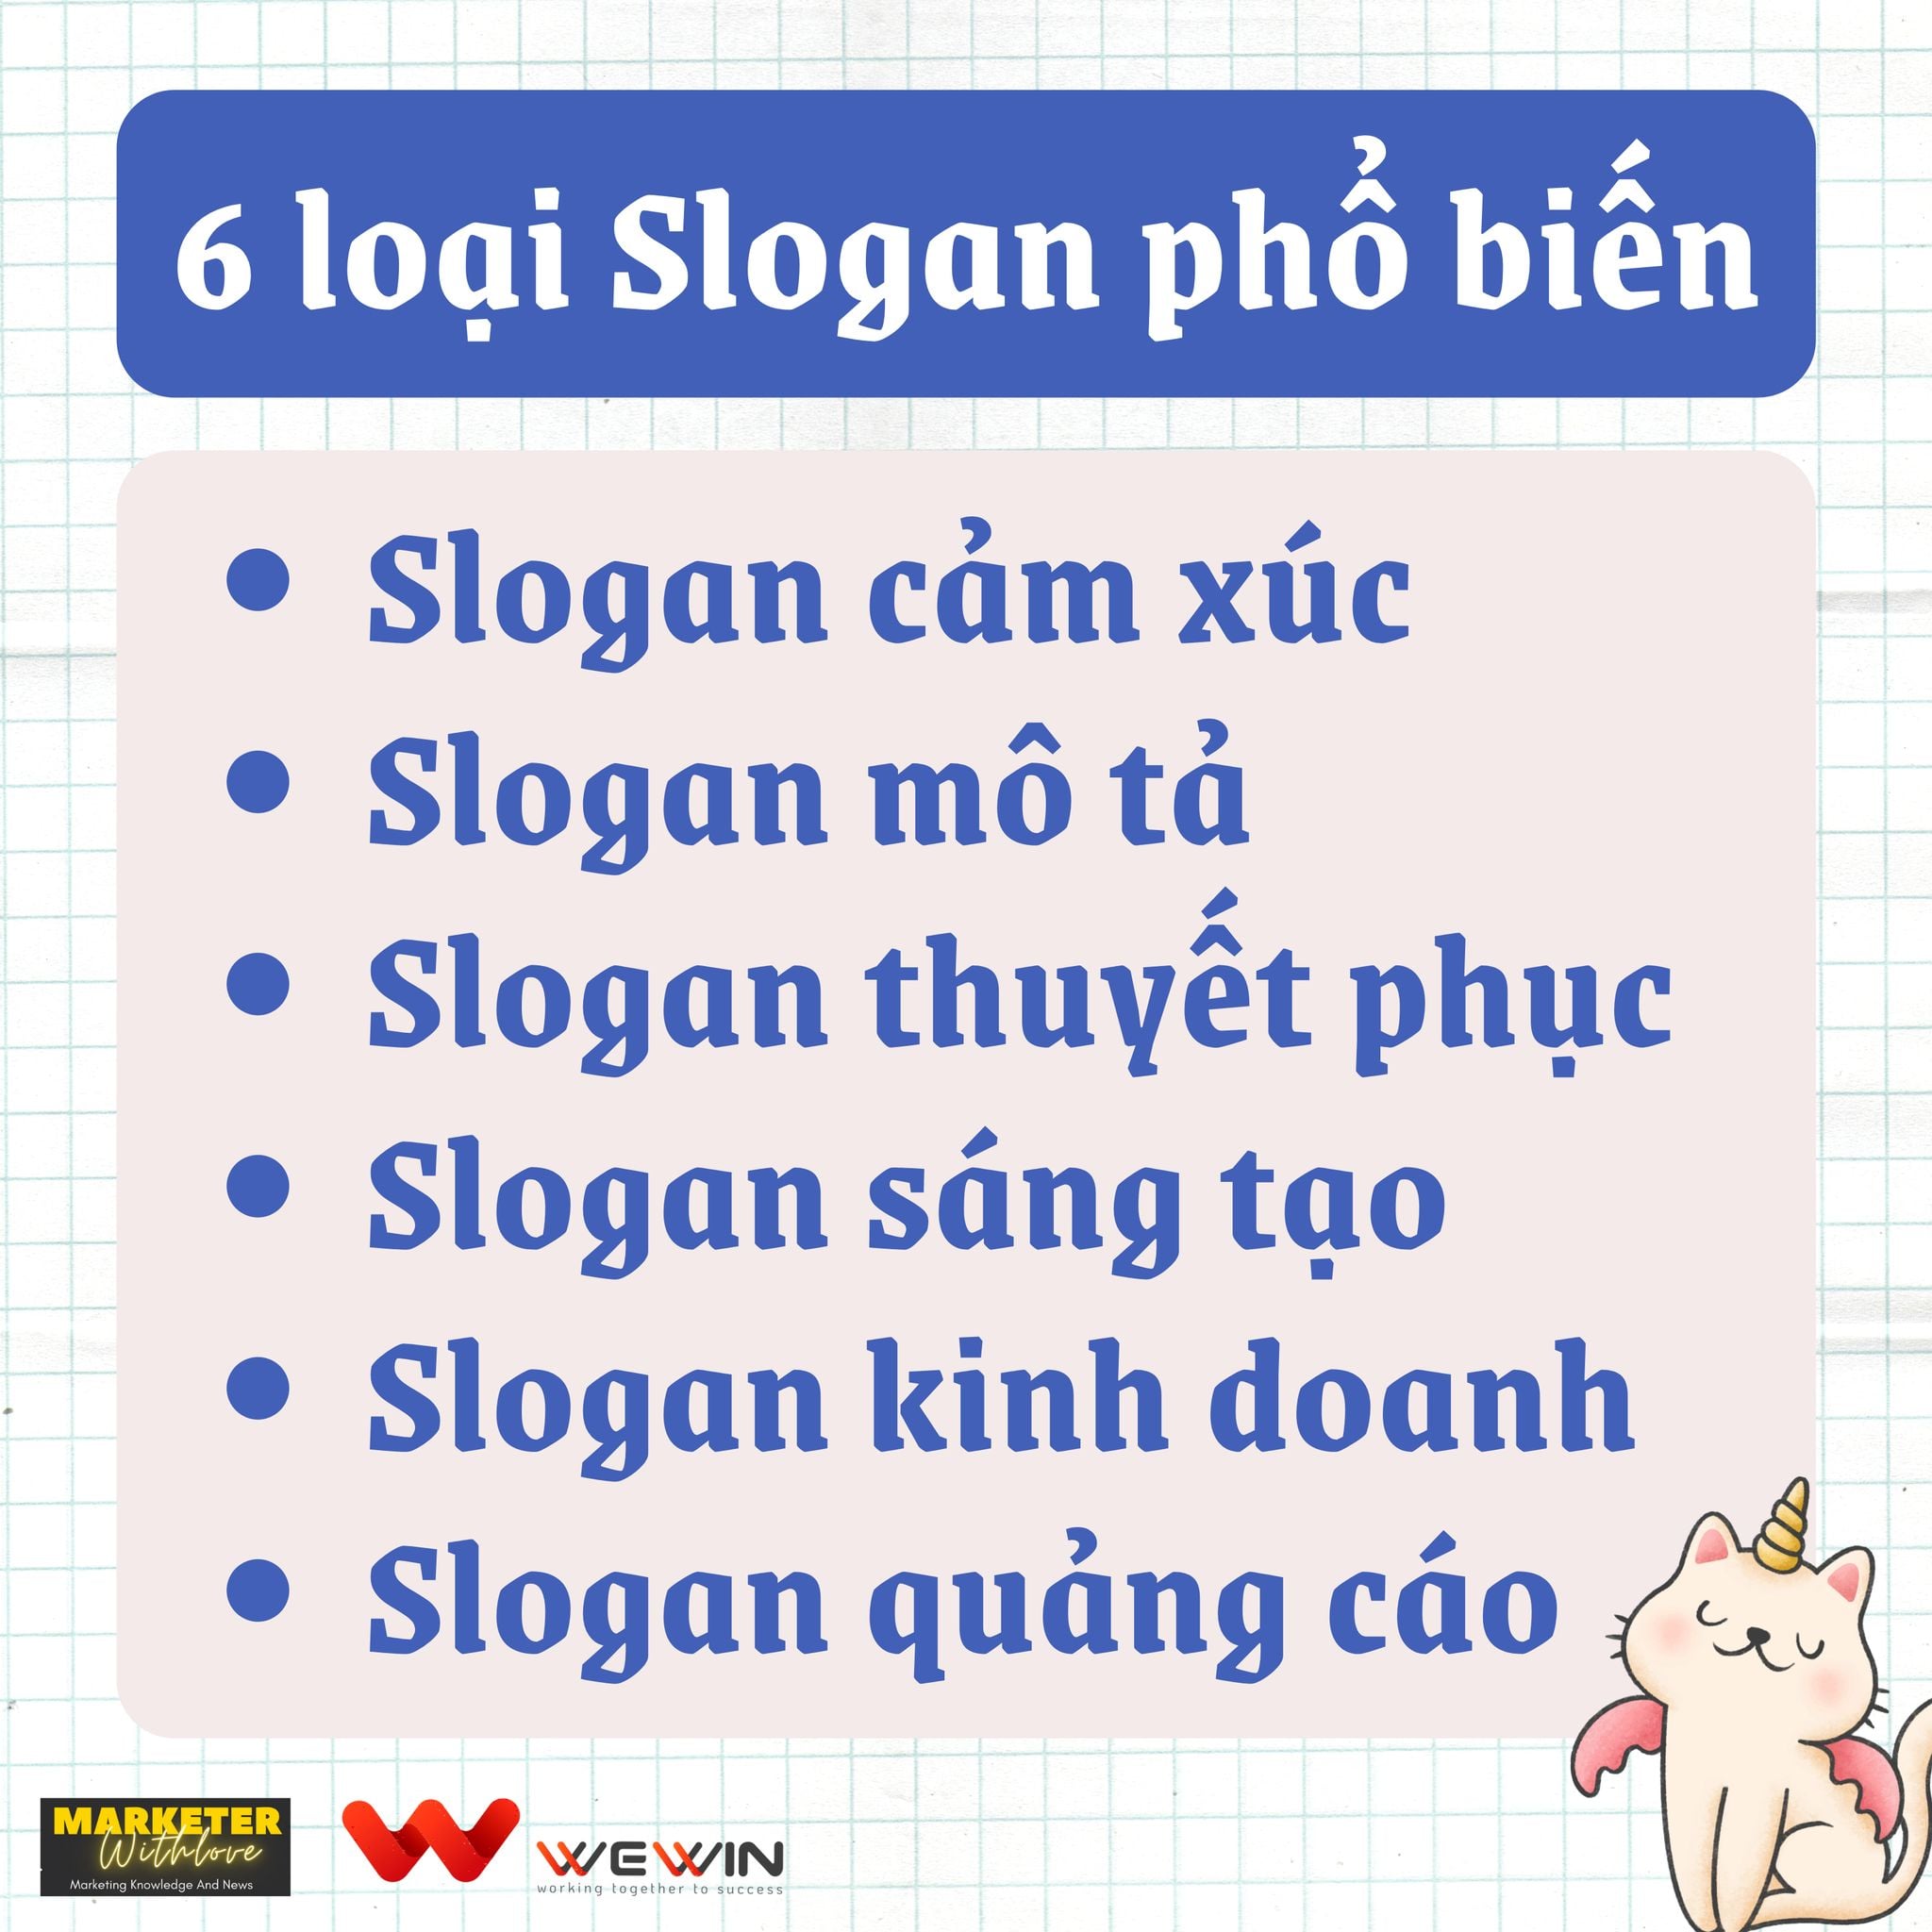 6 loại slogan phổ biến